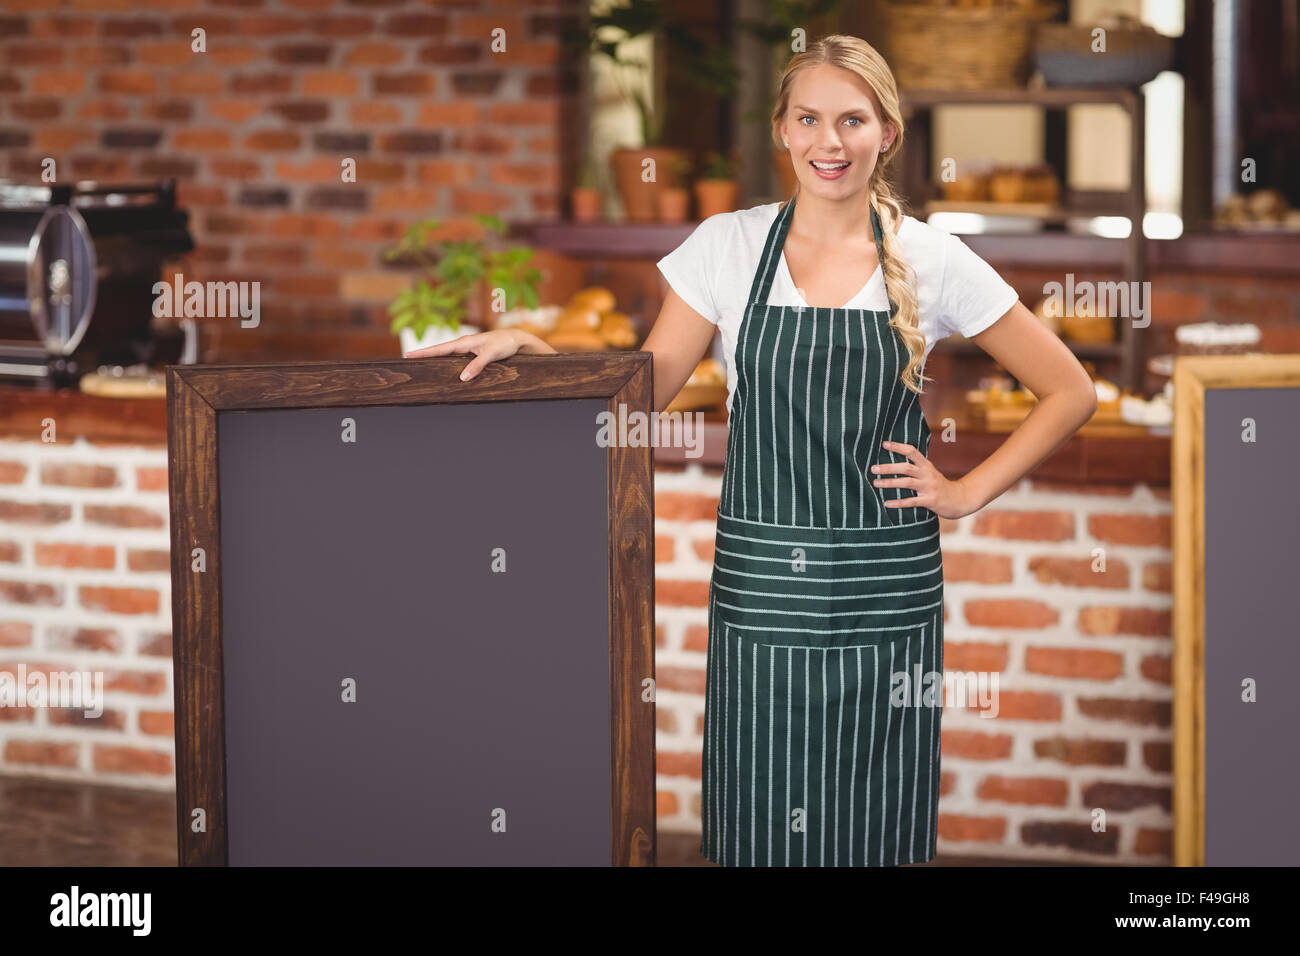 Pretty waitress holding a big chalkboard Stock Photo